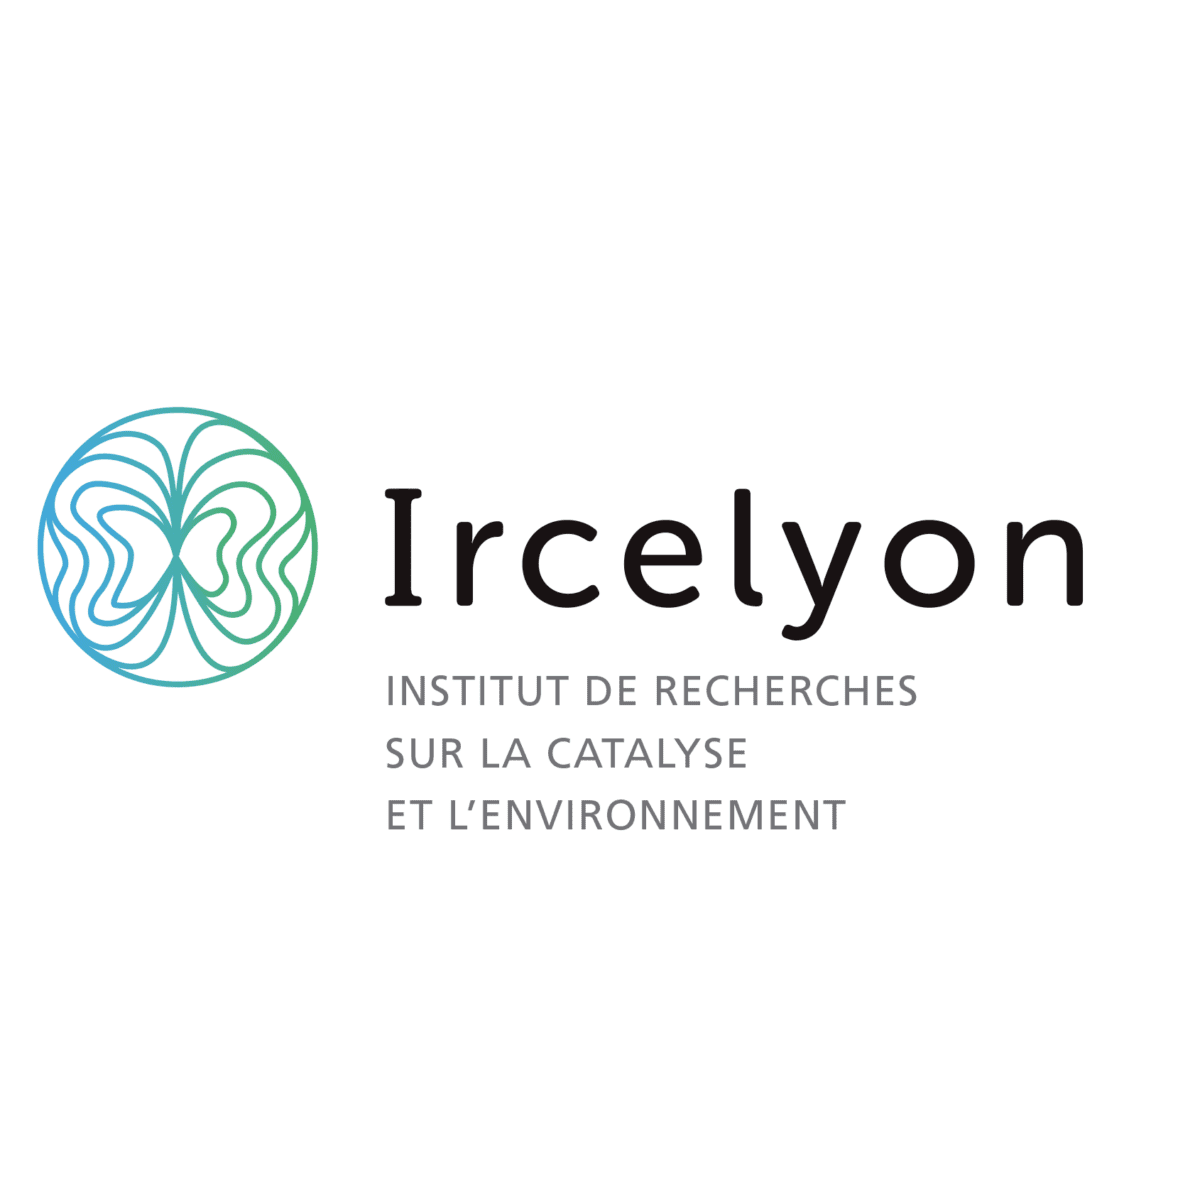 New association member Université Claude Bernard Lyon 1, IRCELYON